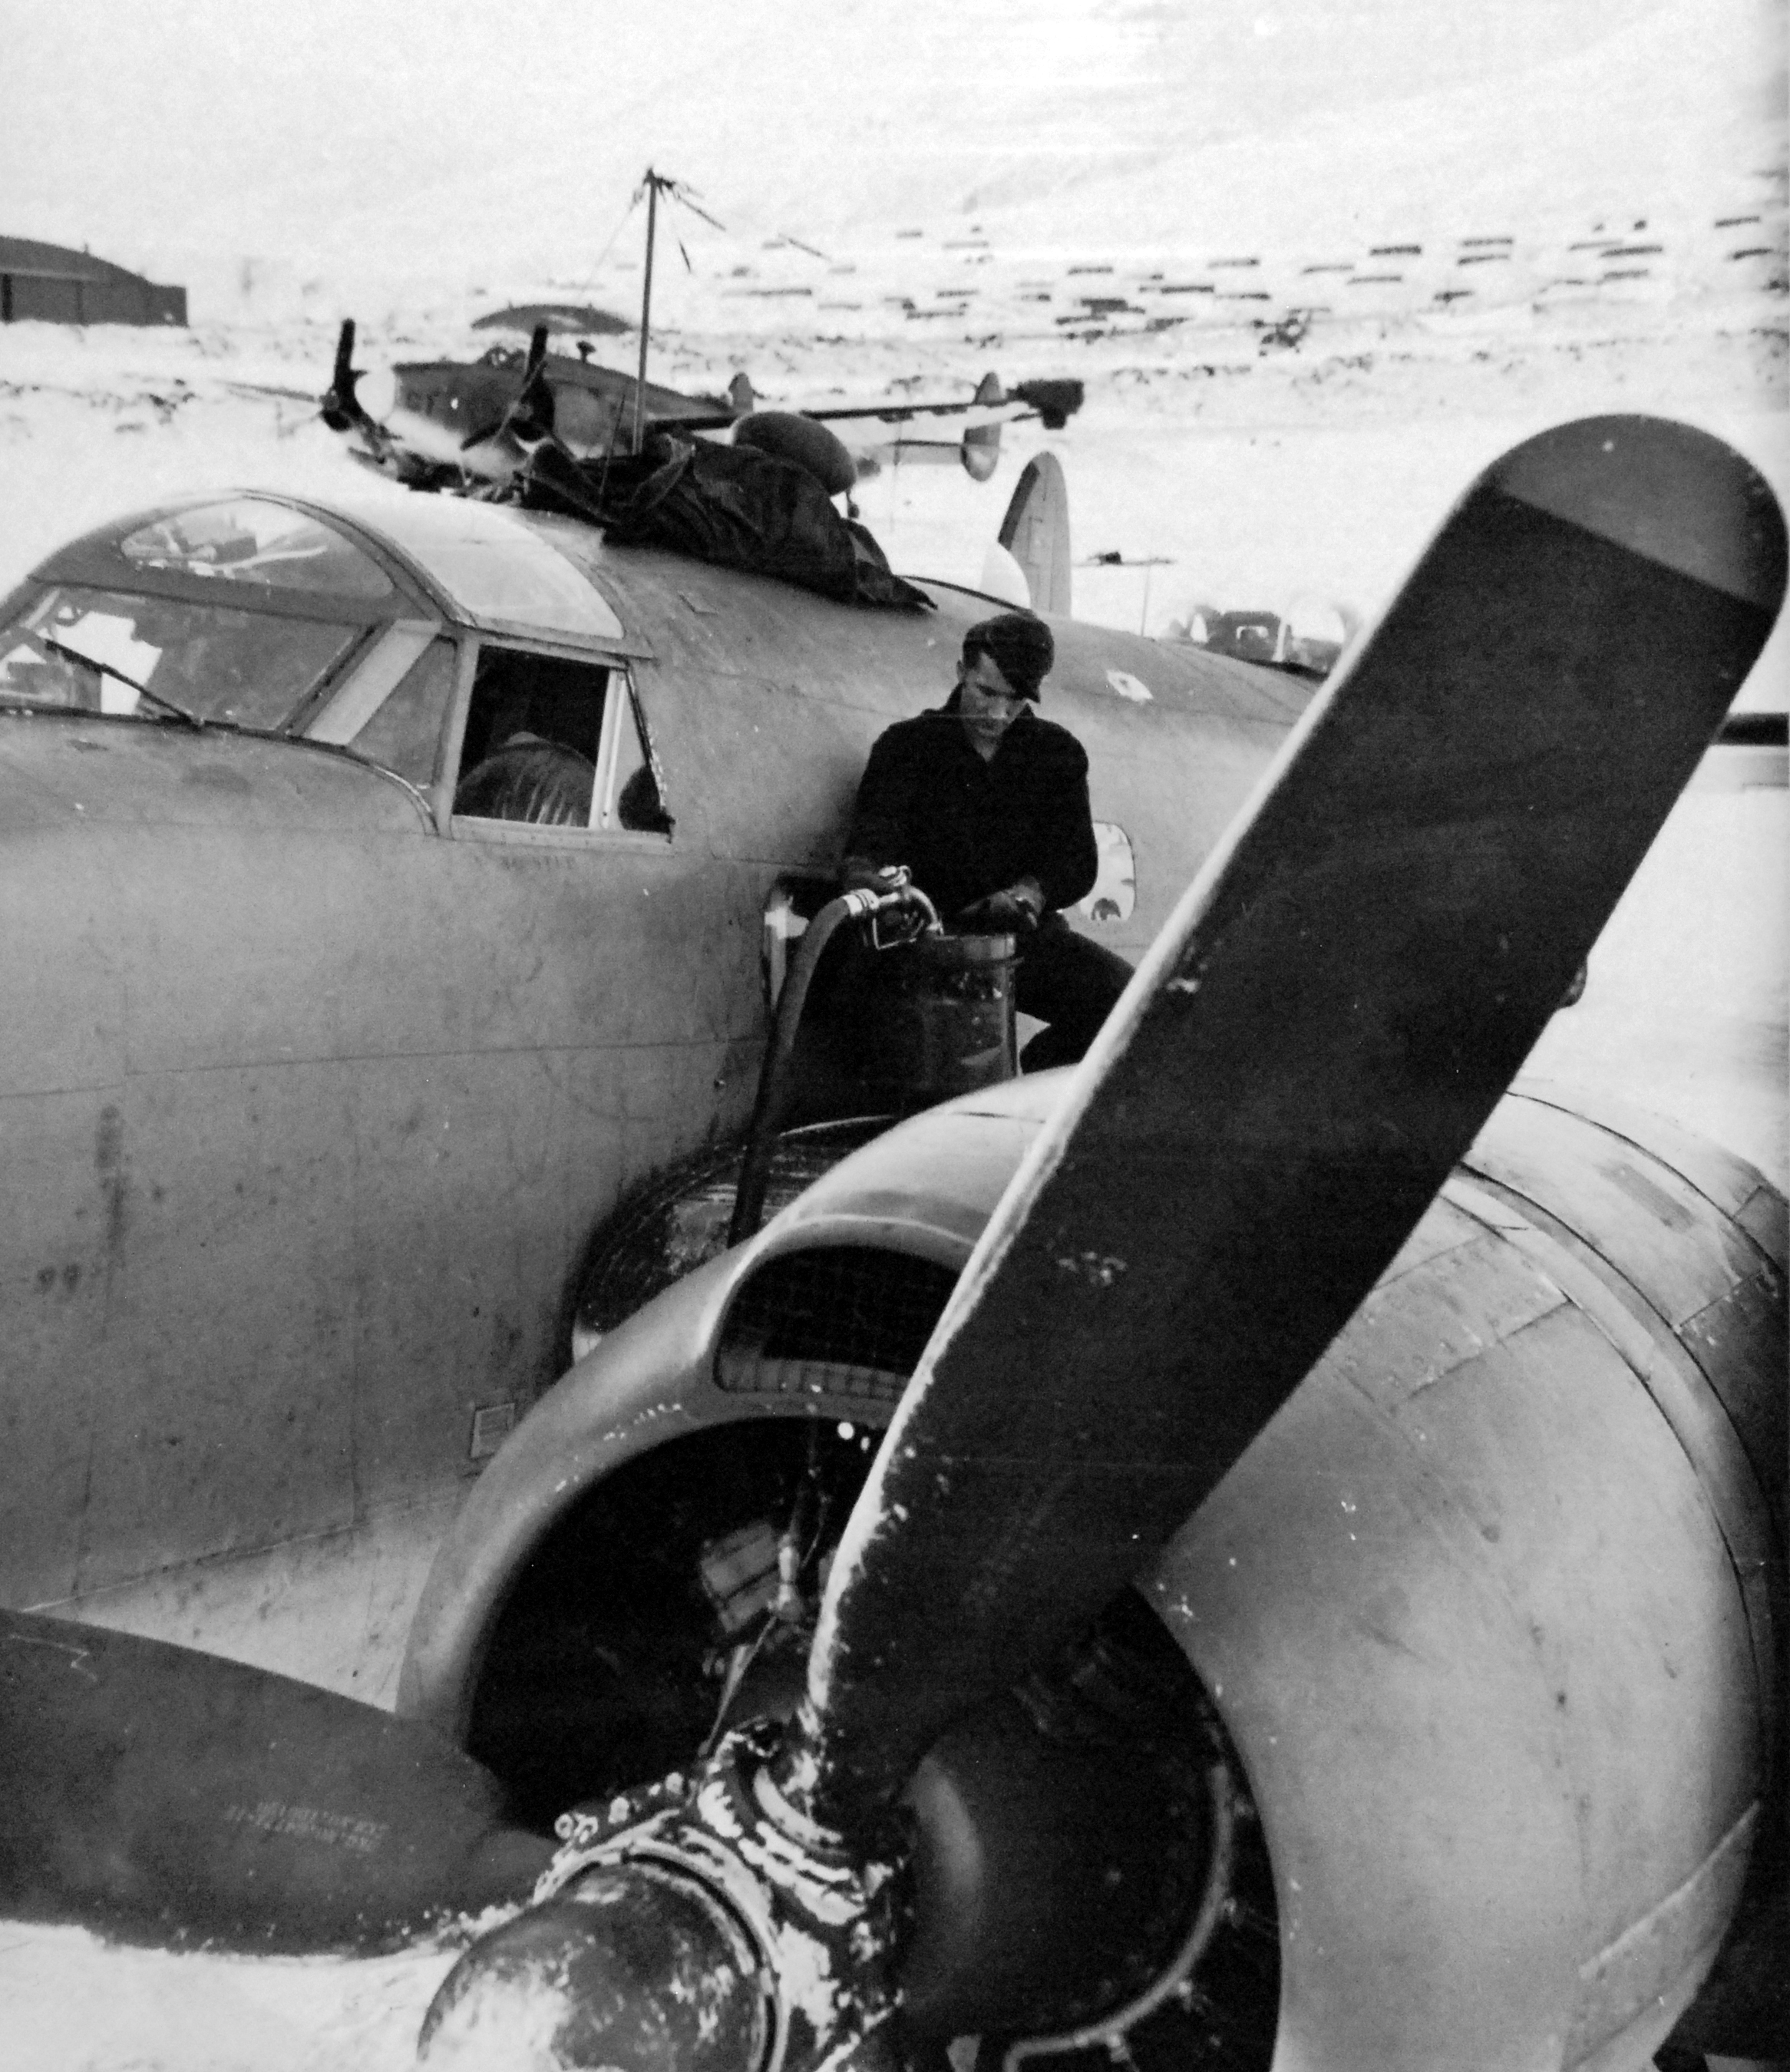 PV-1 Ventura with Fleet Air Wing 4 being refueled at Attu, Aleutians, Alaska, 15 Feb 1945. The crewman is Aviation Machinists Mate-3rd class J.W. Waitaneke.